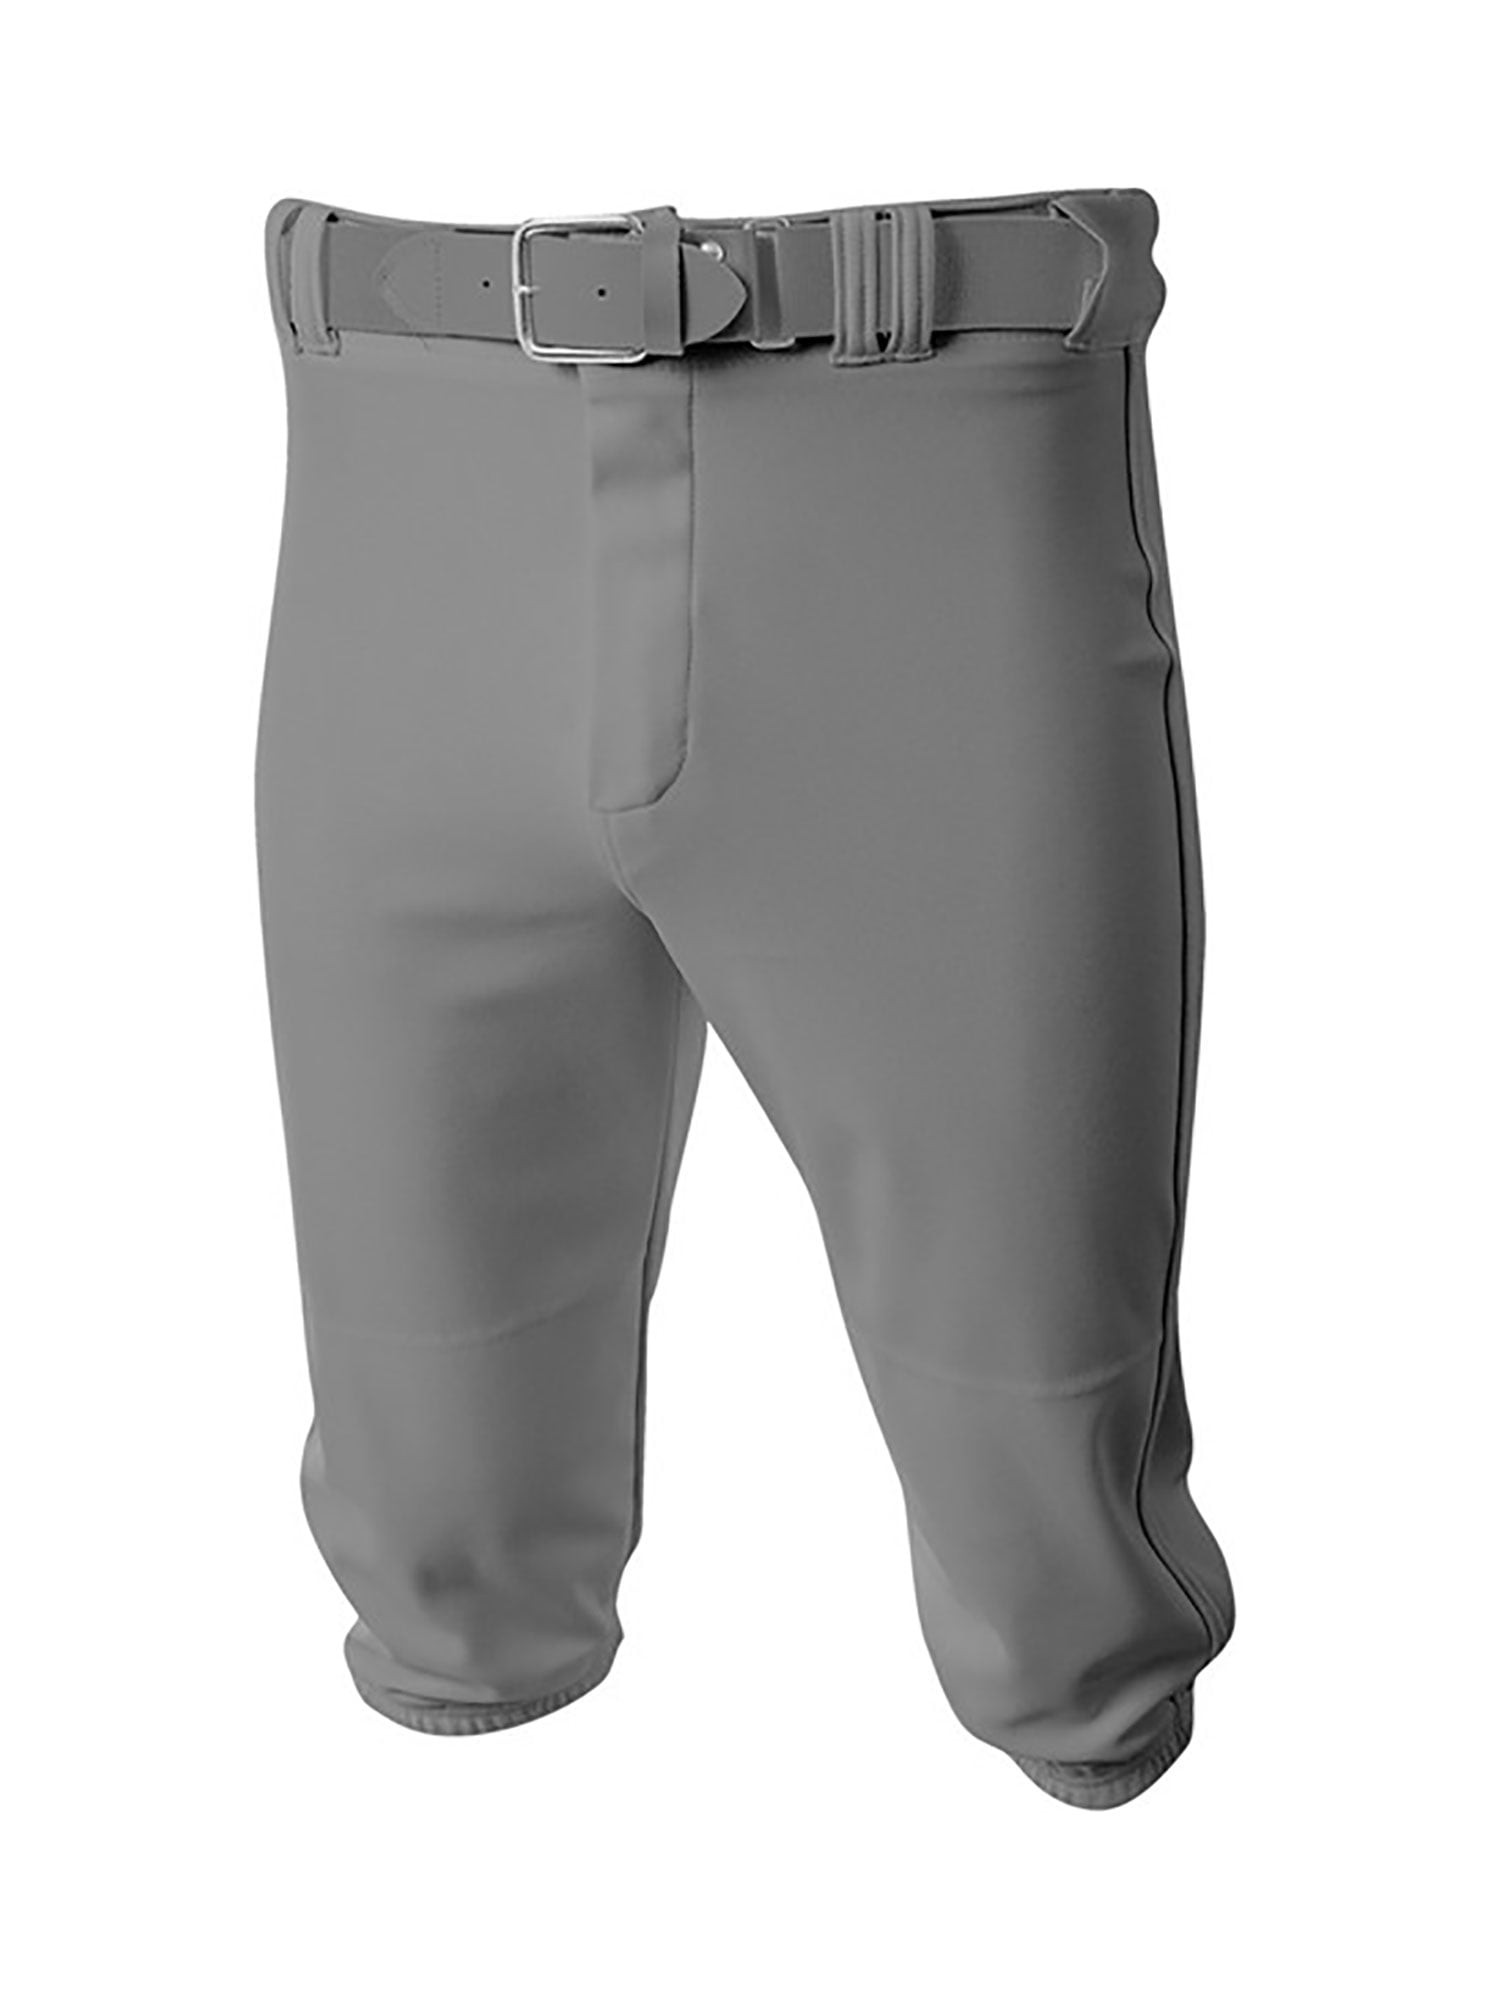 Youth Knickers Baseball Pants Pro Line (Grey, X-Small) 